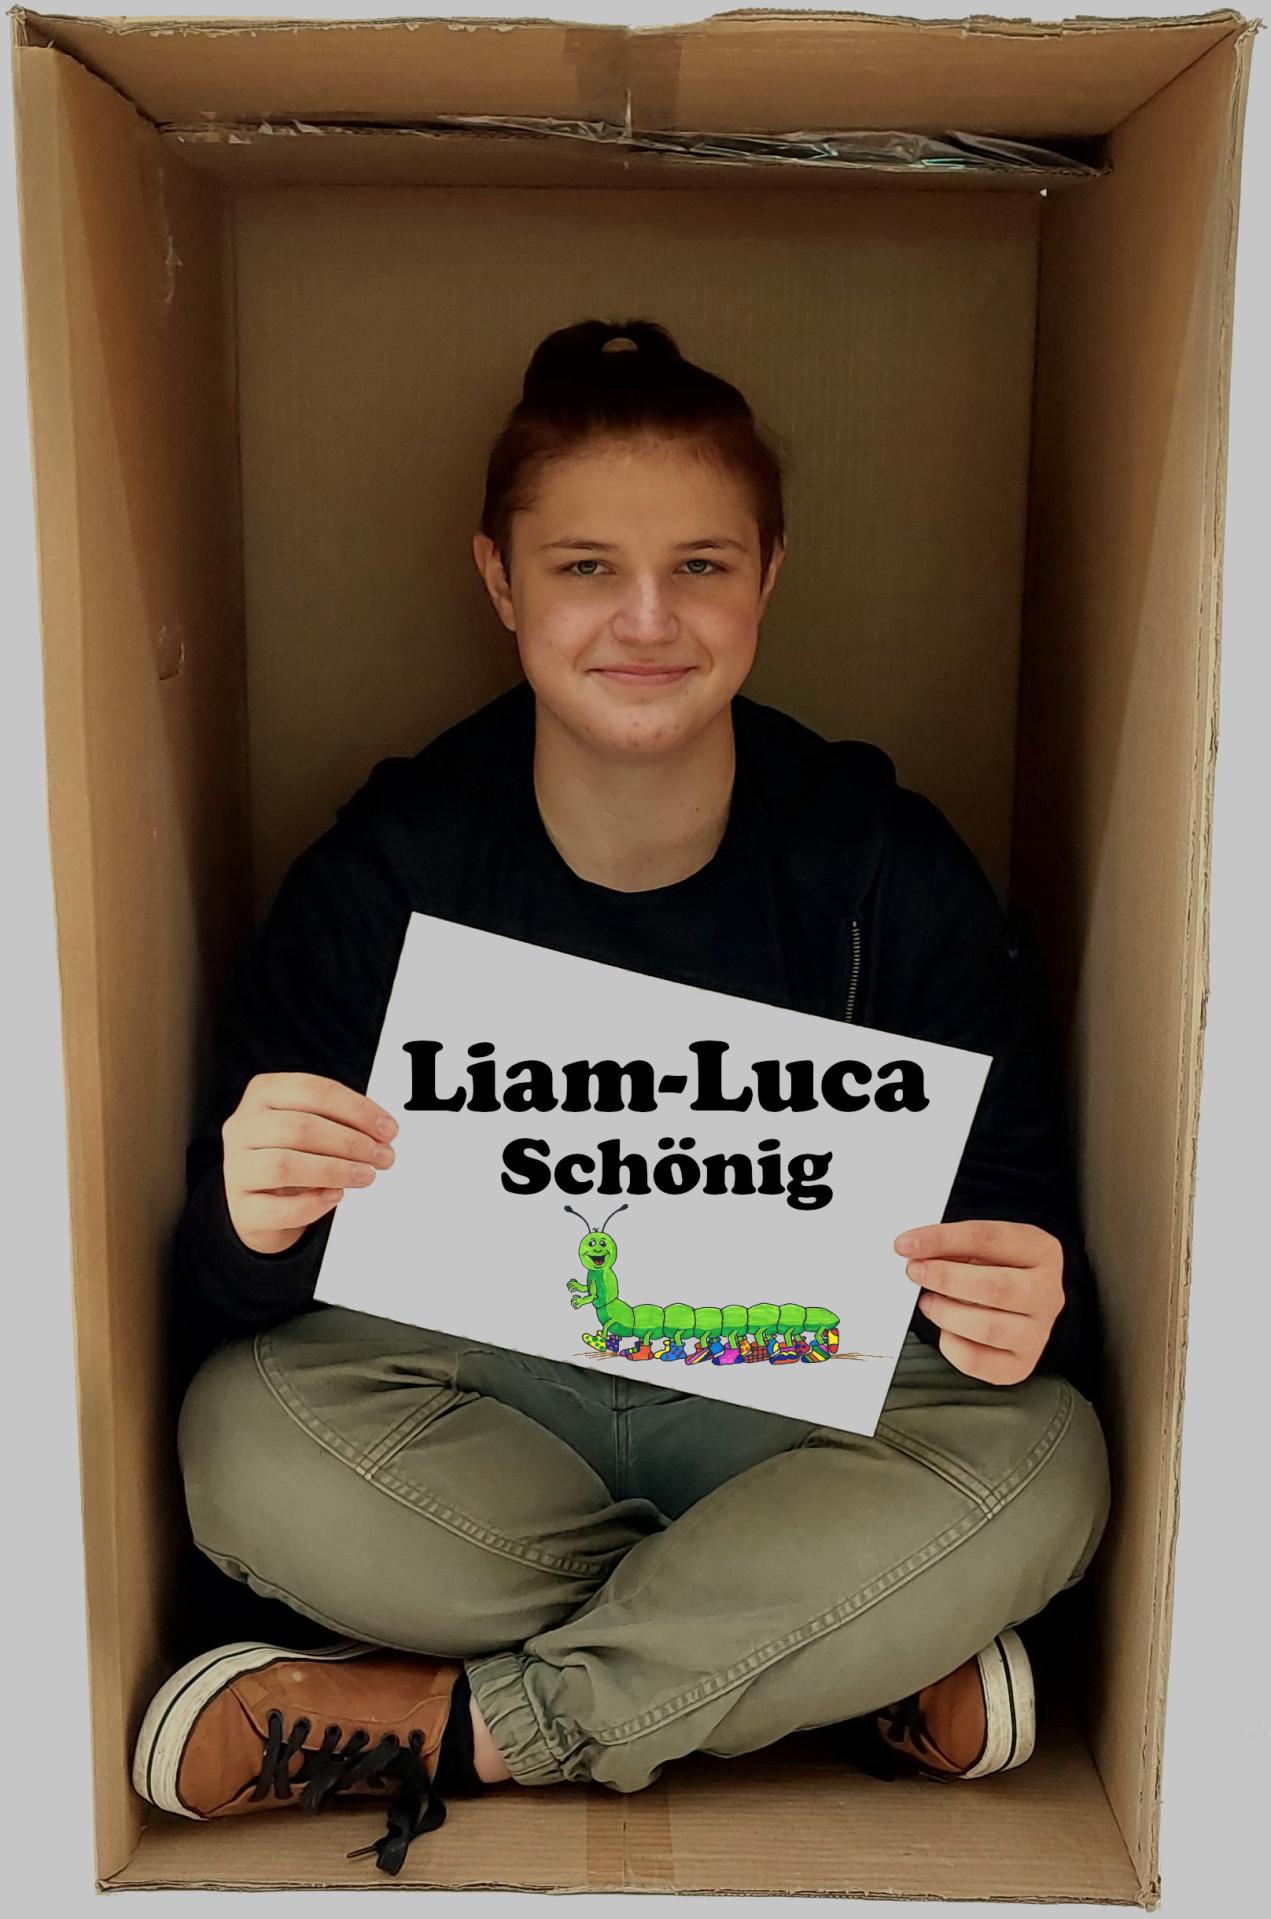 Liam-Luca Schönig